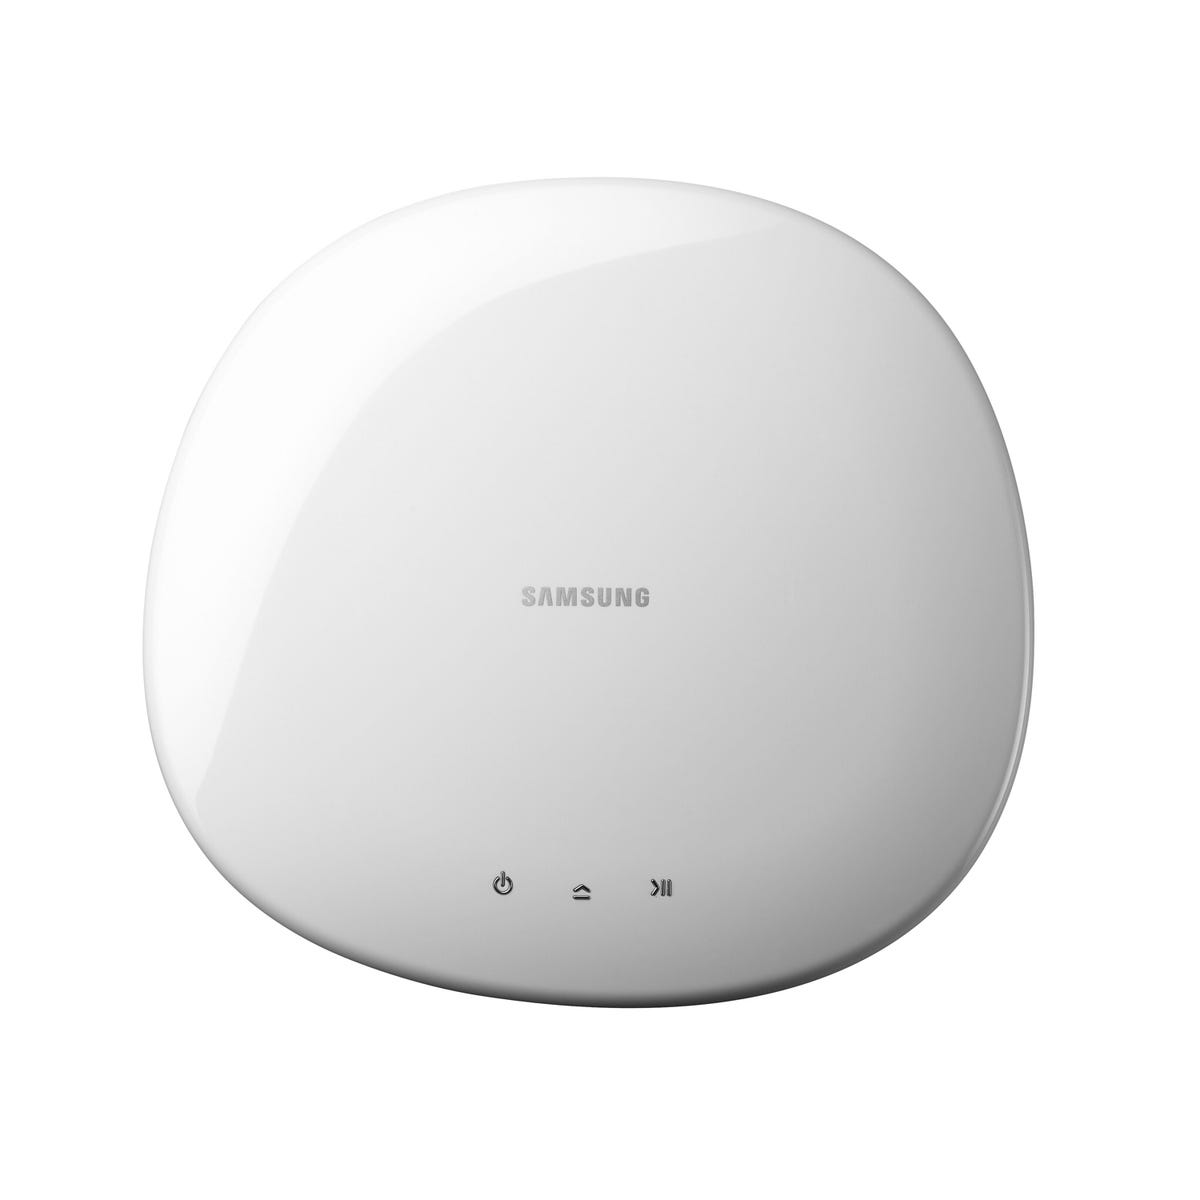 Samsung-DVD-H1080-DVD-Player--white,top.jpg